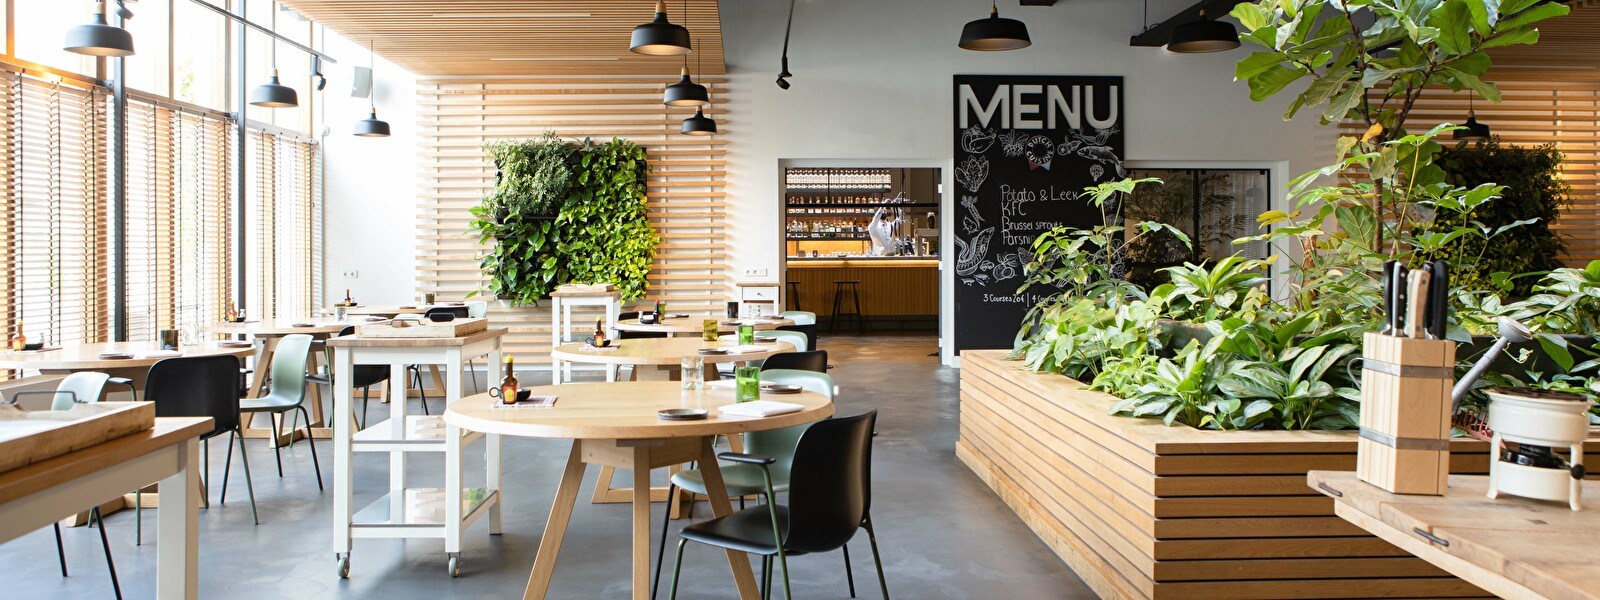 Restaurant Wannee Leeuwarden with ecological herb garden